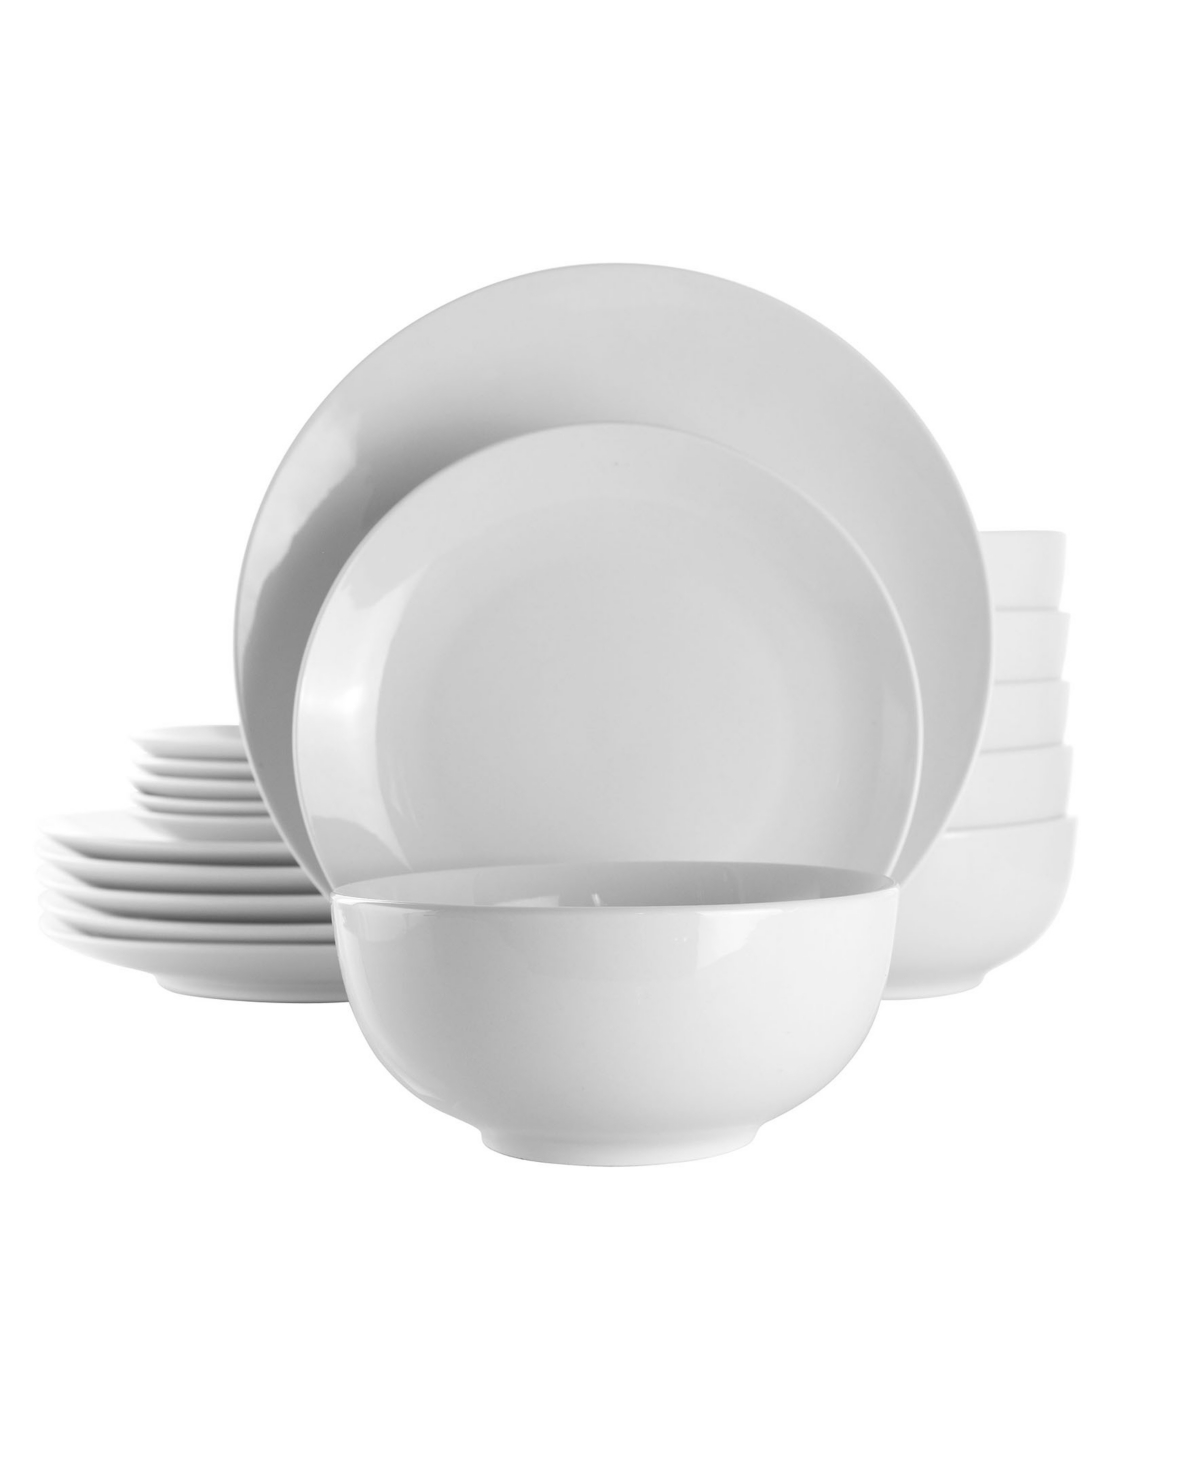 Luna Dinnerware Set of 18 Pieces - White